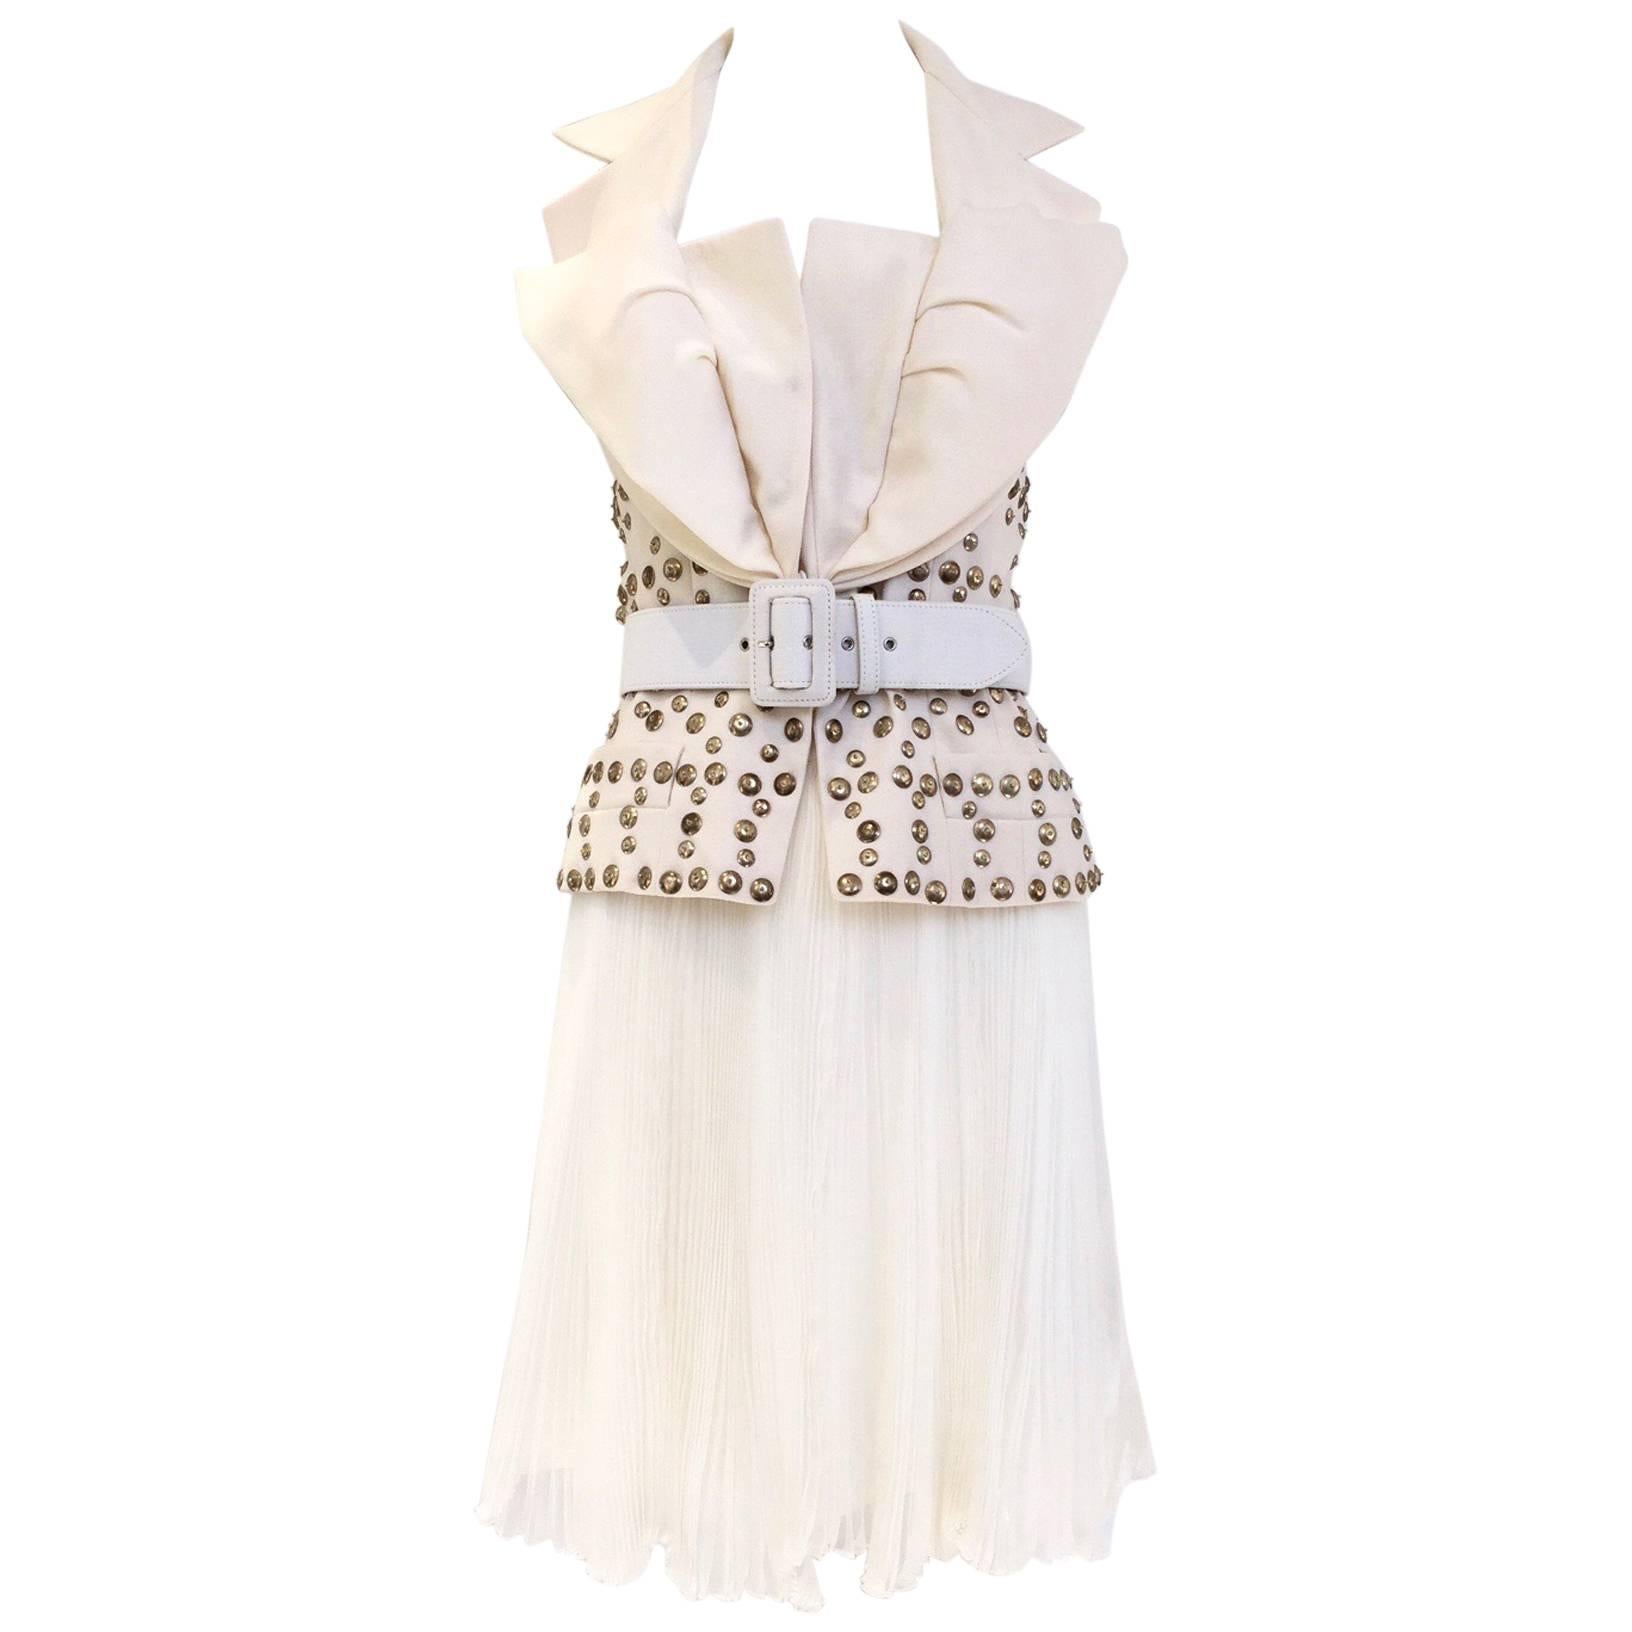 Christian Dior John Galliano Ivory Halter Studded Top and Plisse Skirt ensemble